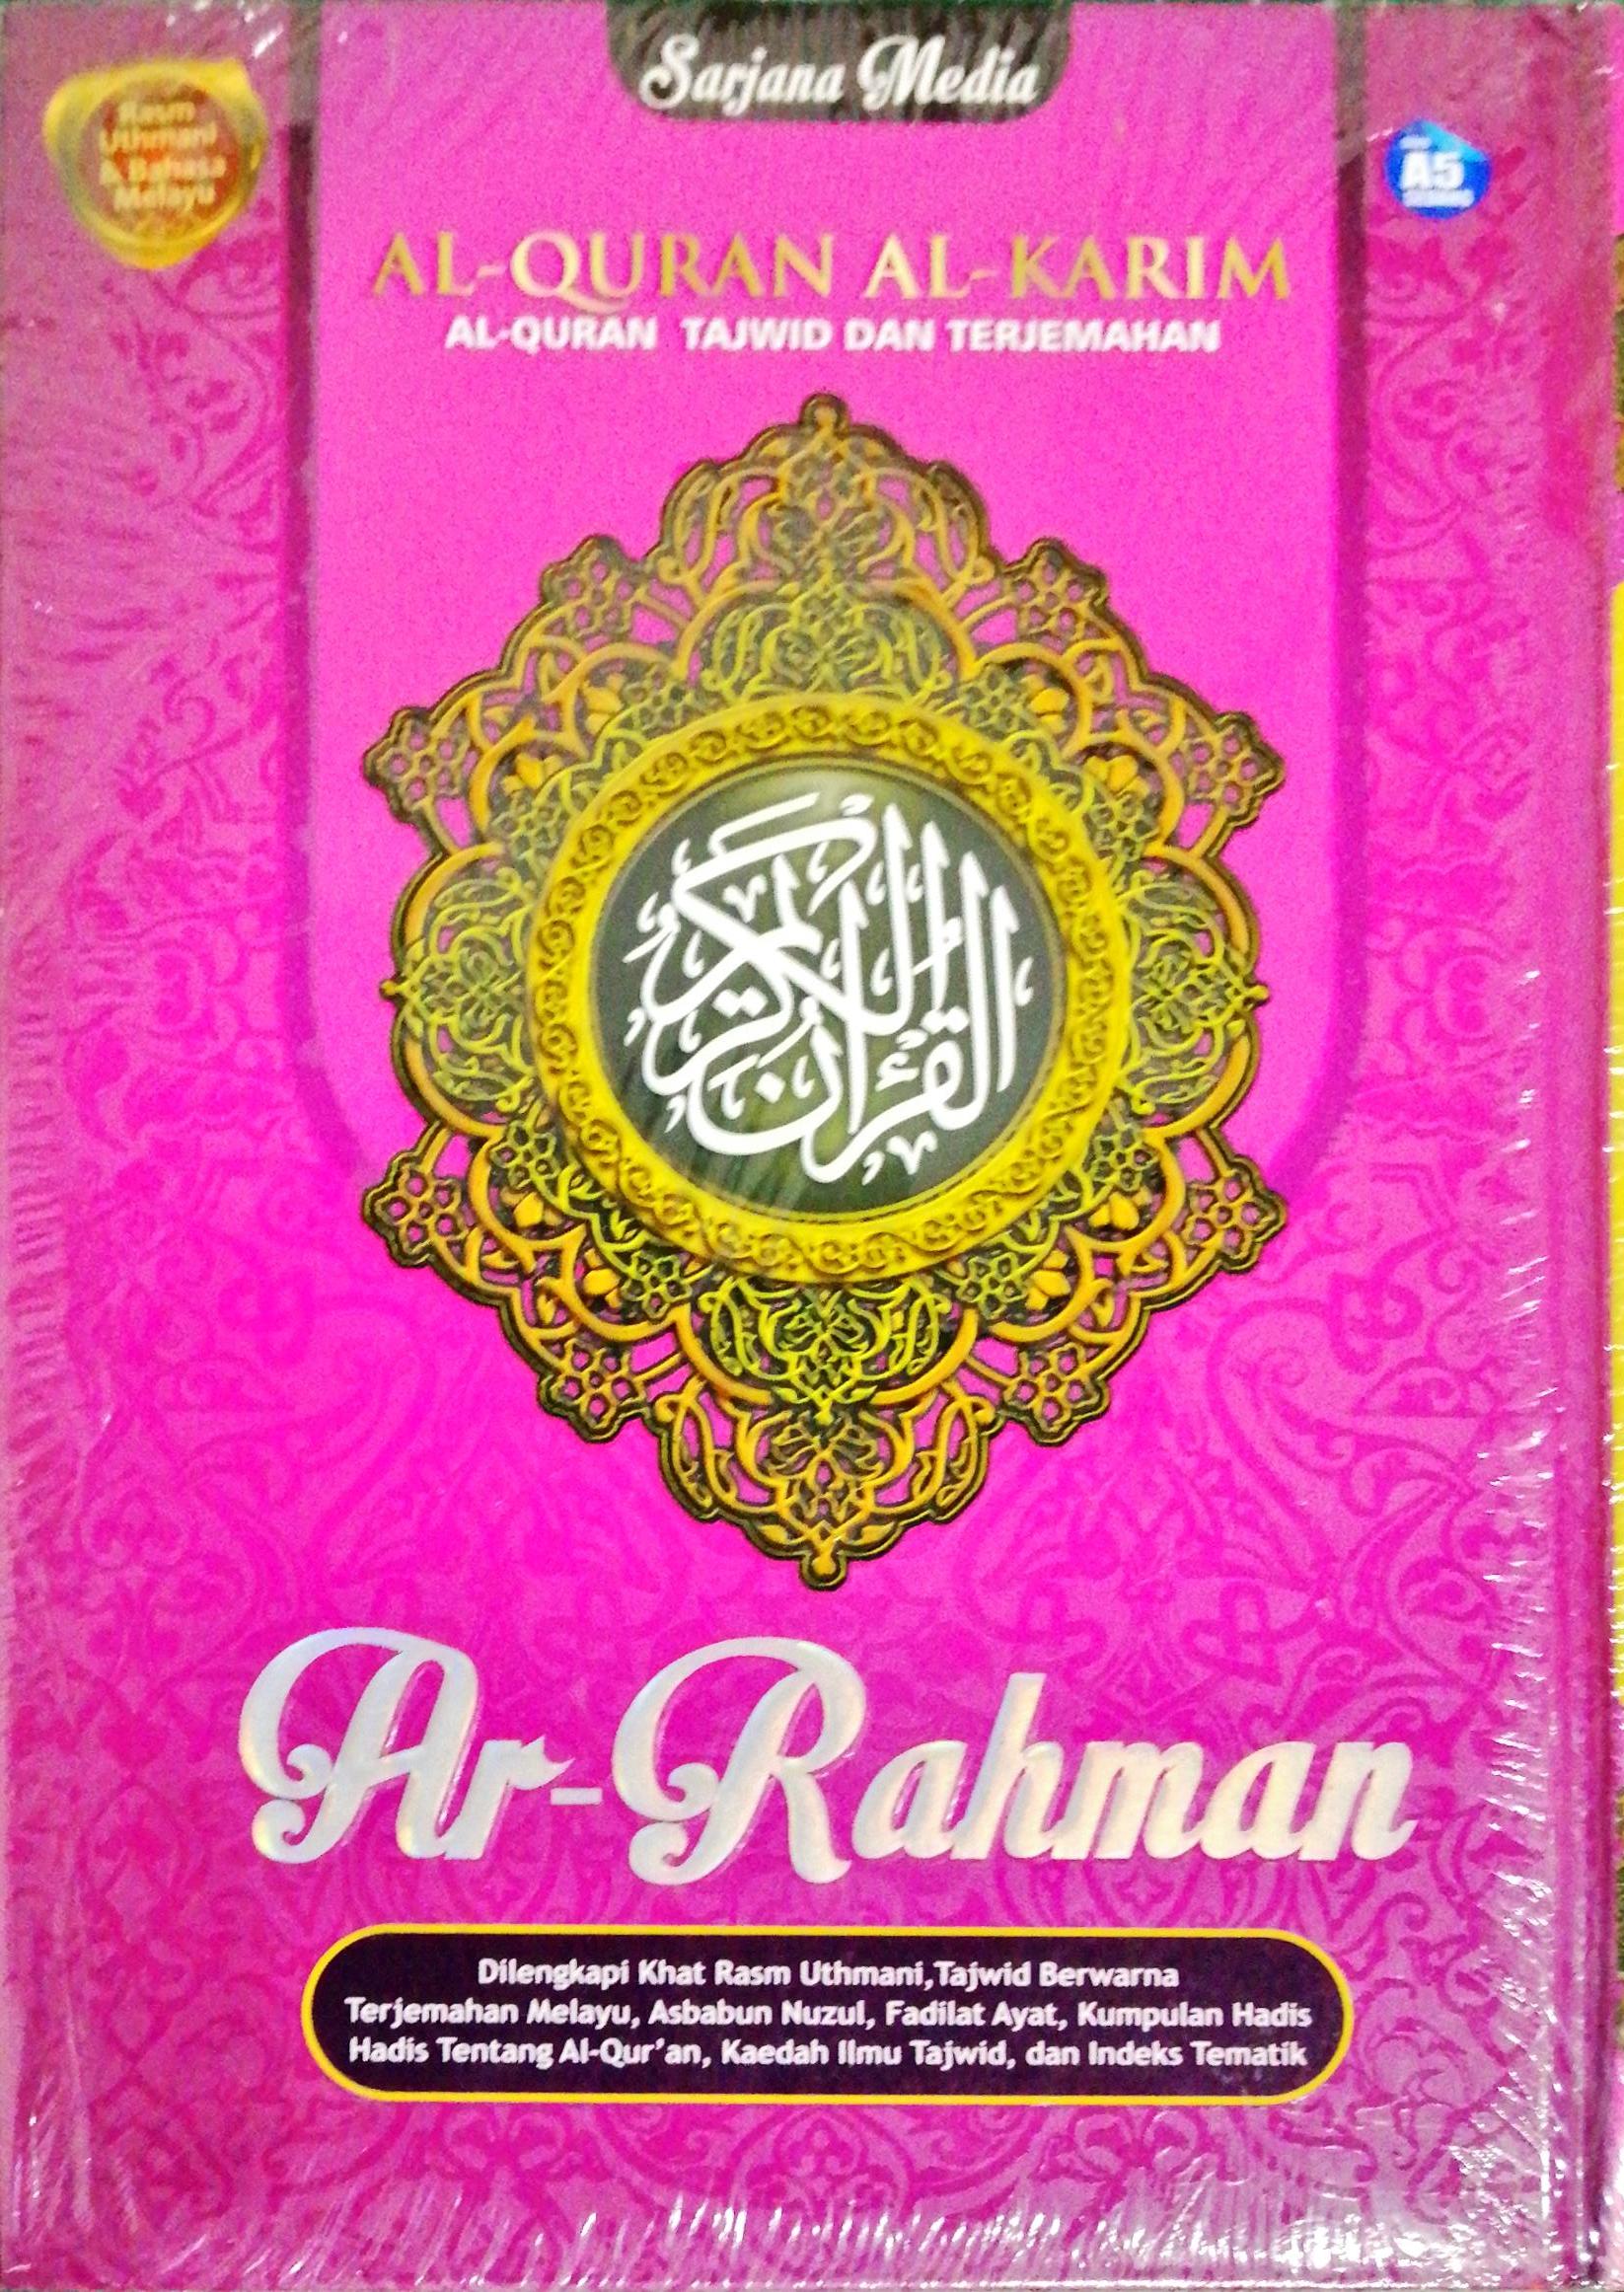 Al-Quran Al-Karim - Al-Quran Tajwid Dan Terjemahan Ar-Rahman (A5) - (TBTP1032)